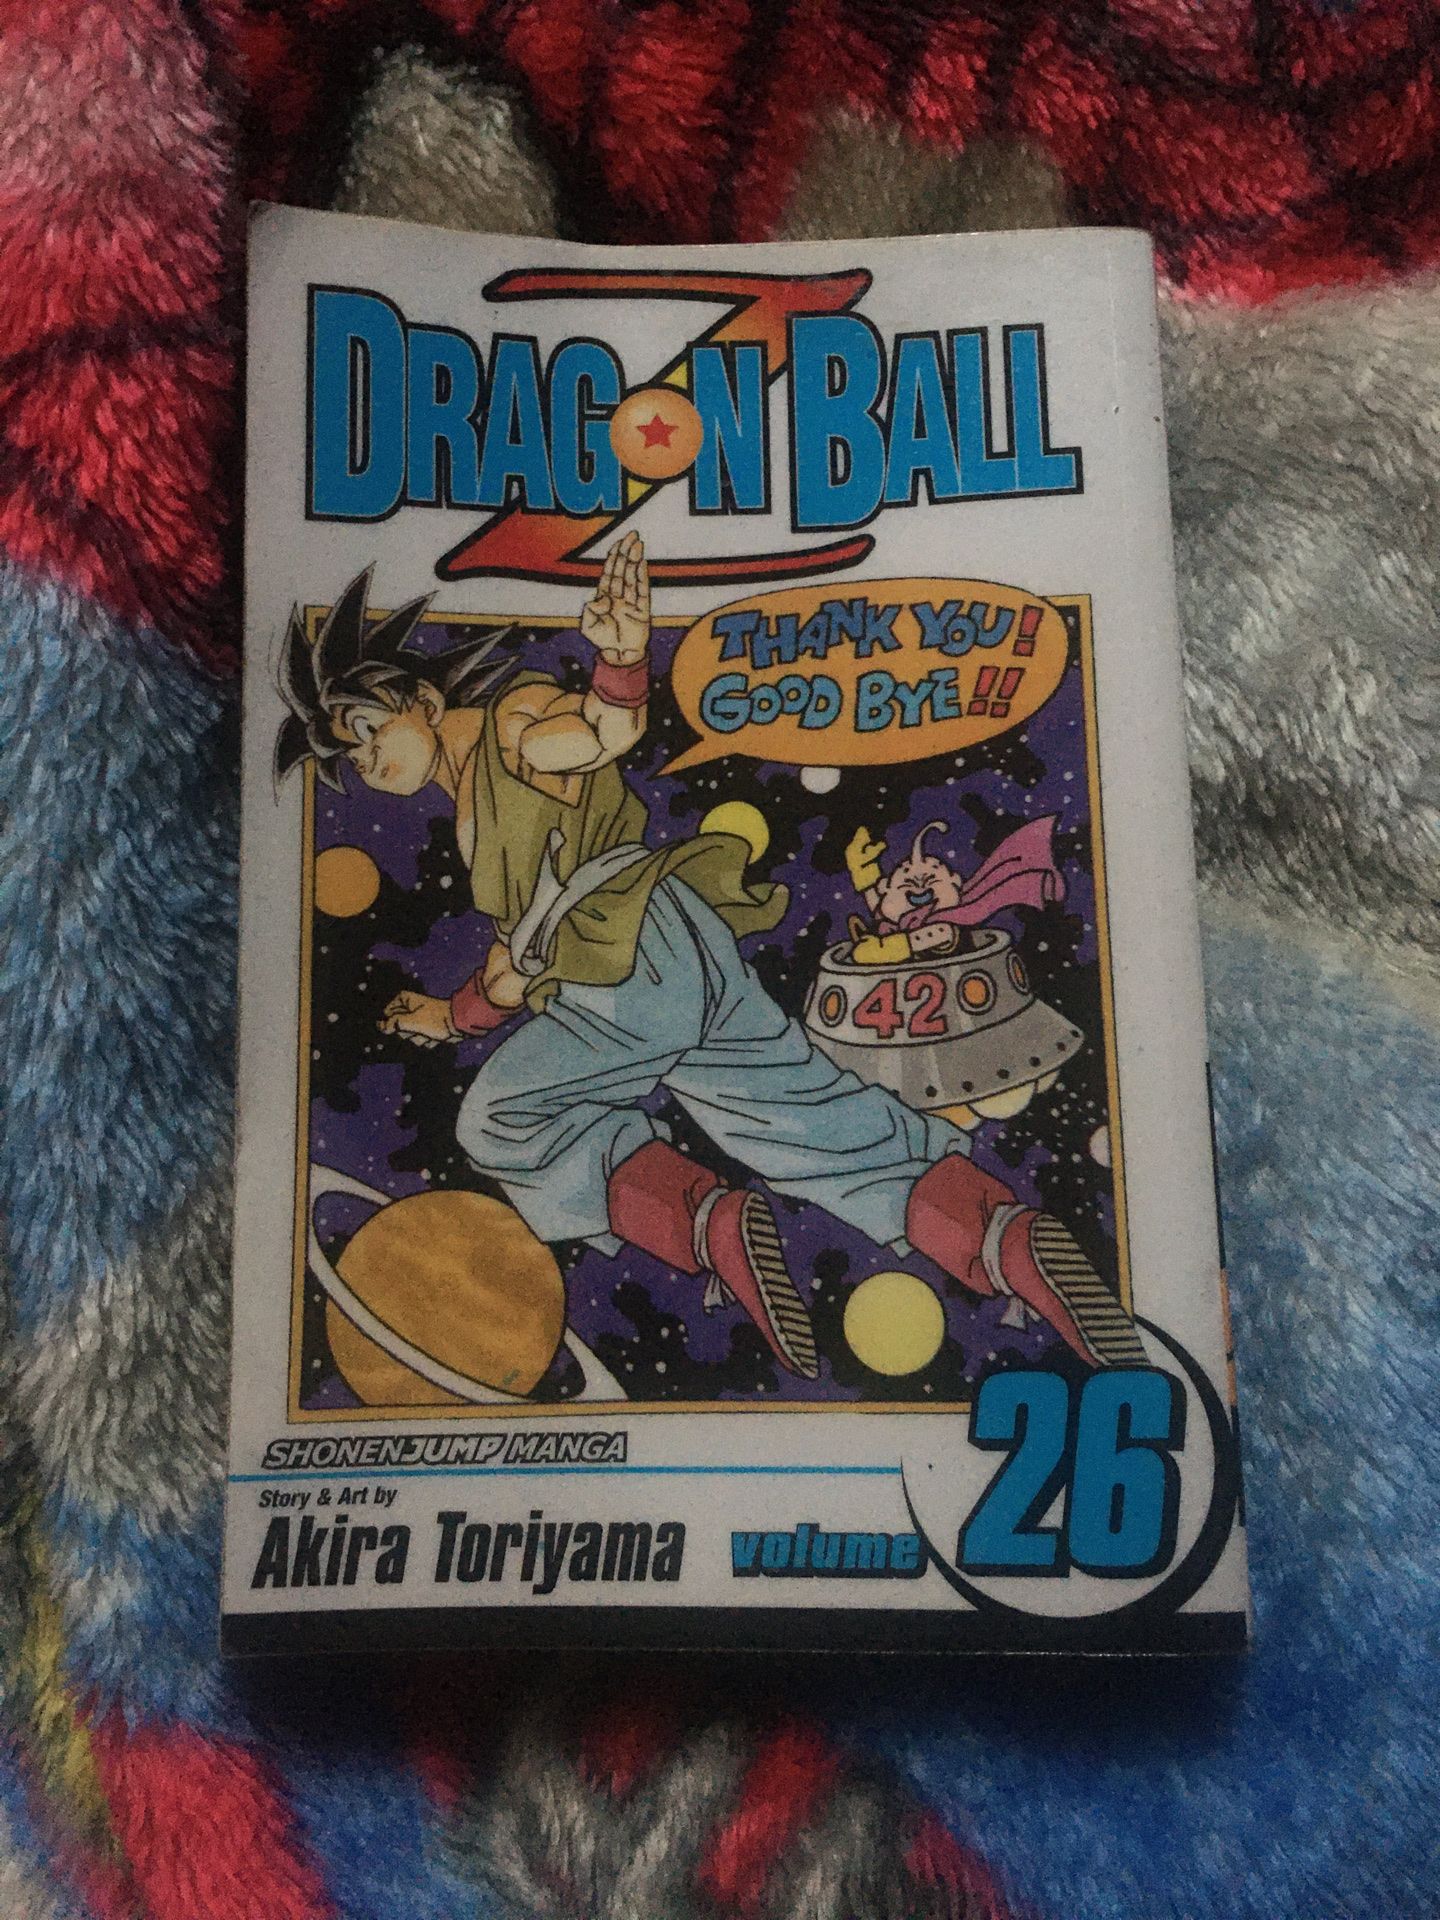 Dragon ball Z manga